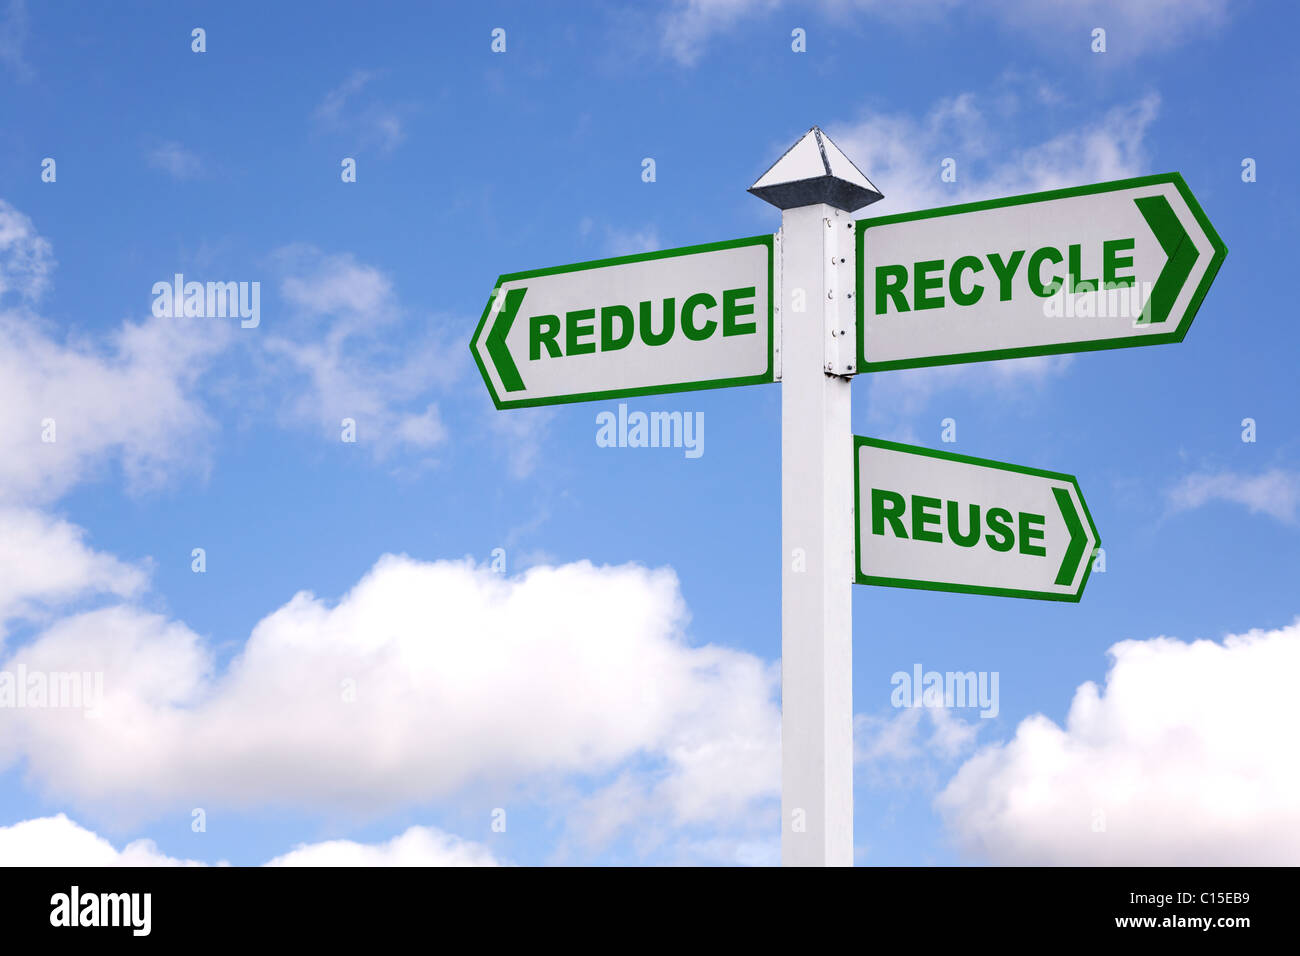 Reciclar reducir reutilizar fotografías e imágenes de alta resolución -  Alamy